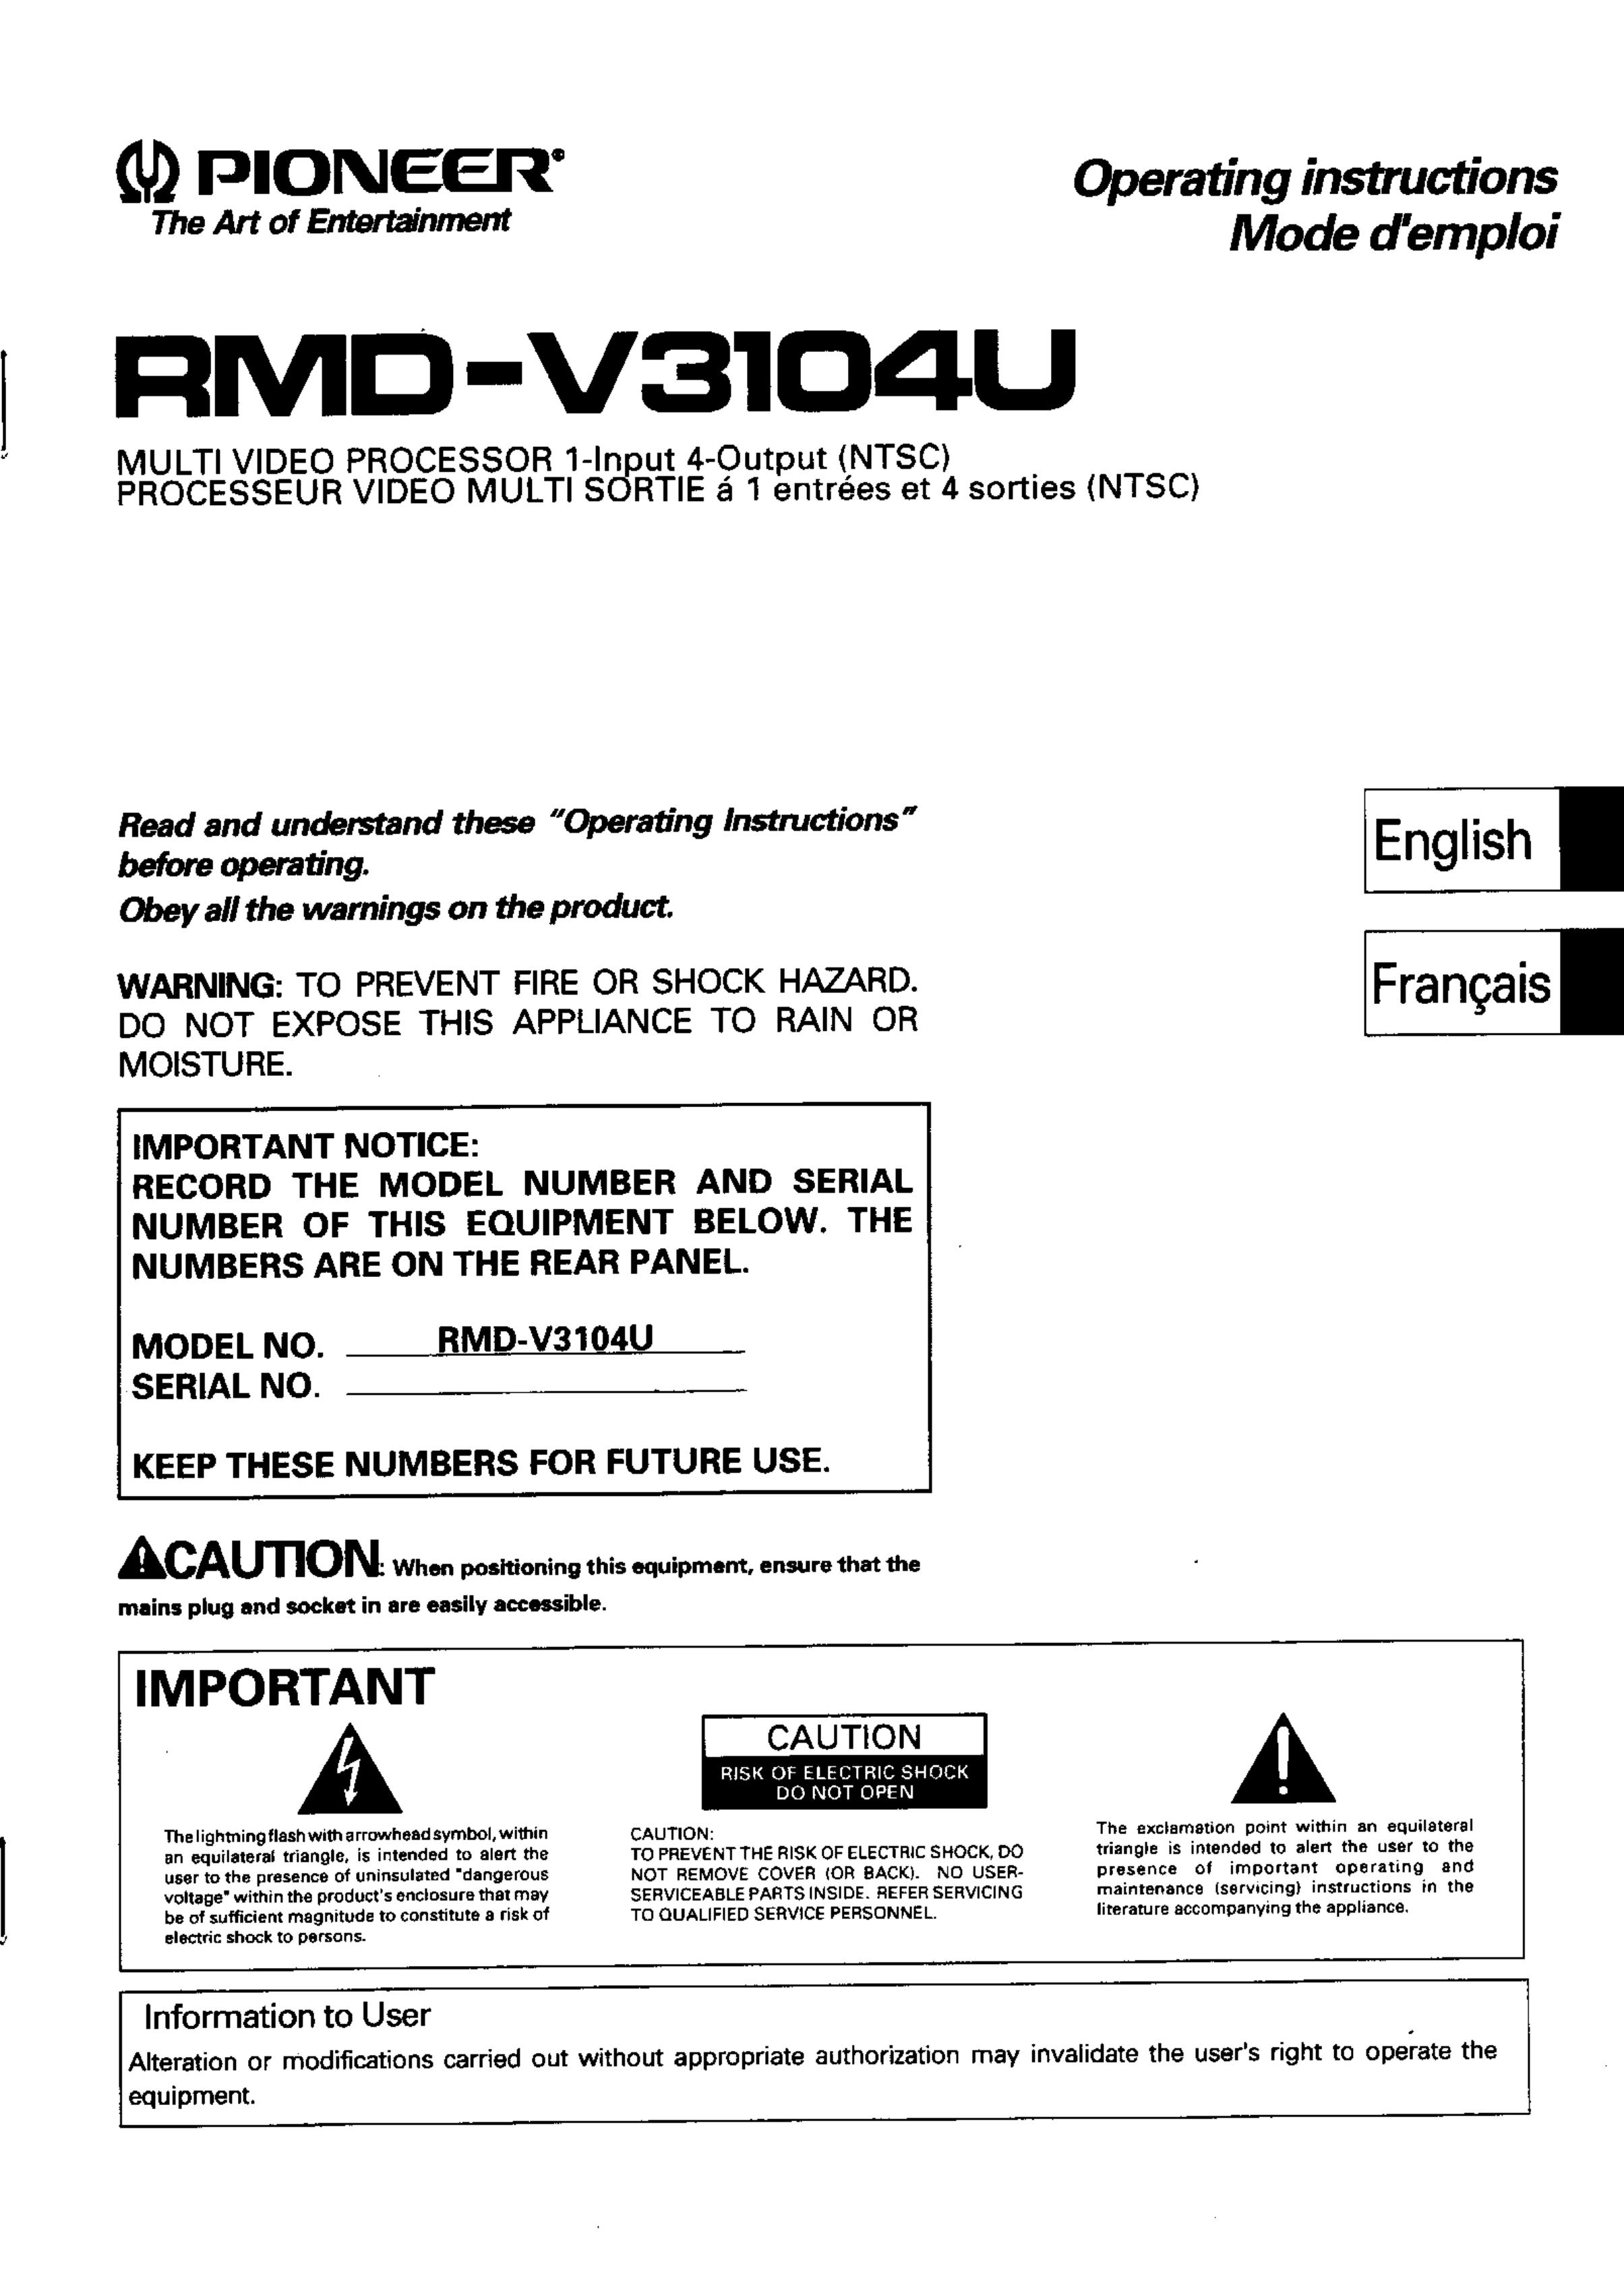 Akai RMD-V3104U Camcorder User Manual (Page 1)